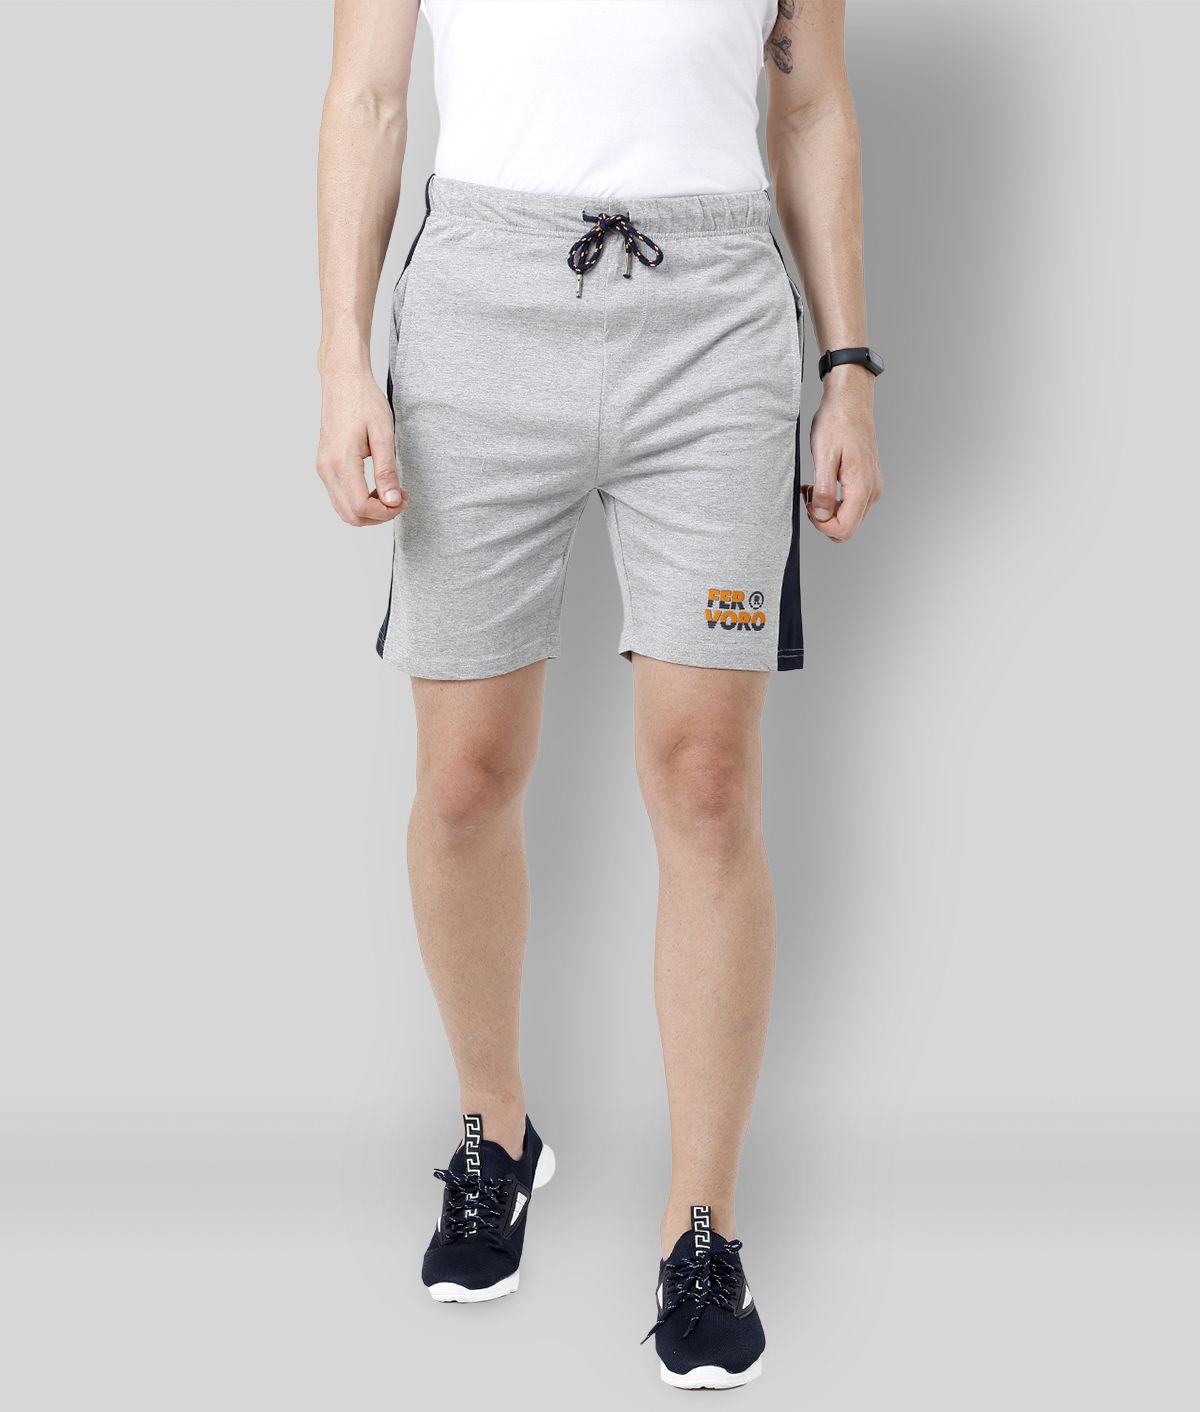     			FERVORO - Grey Cotton Blend Men's Shorts ( Pack of 1 )